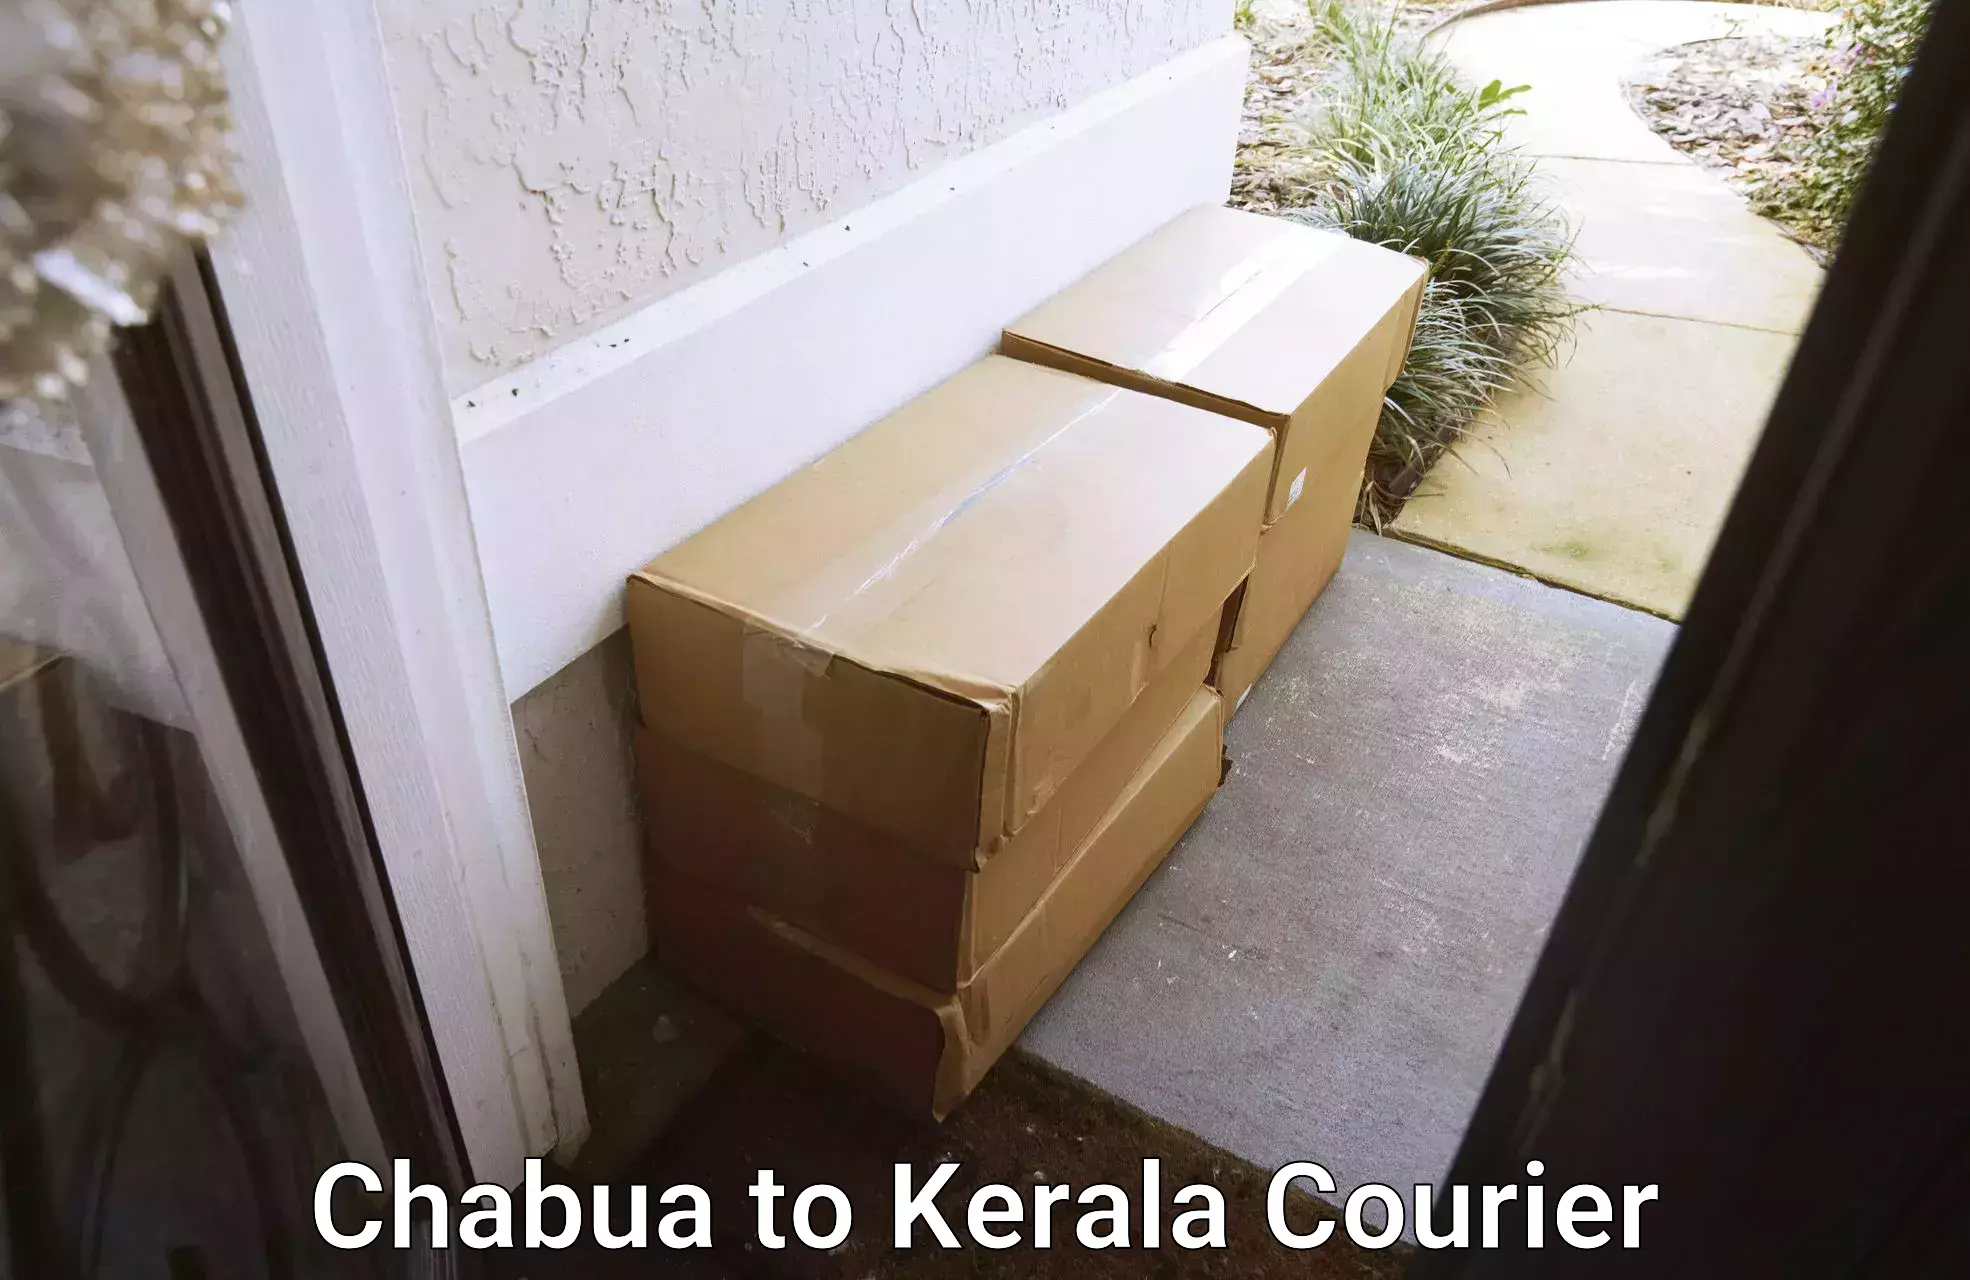 Express courier capabilities Chabua to Trivandrum